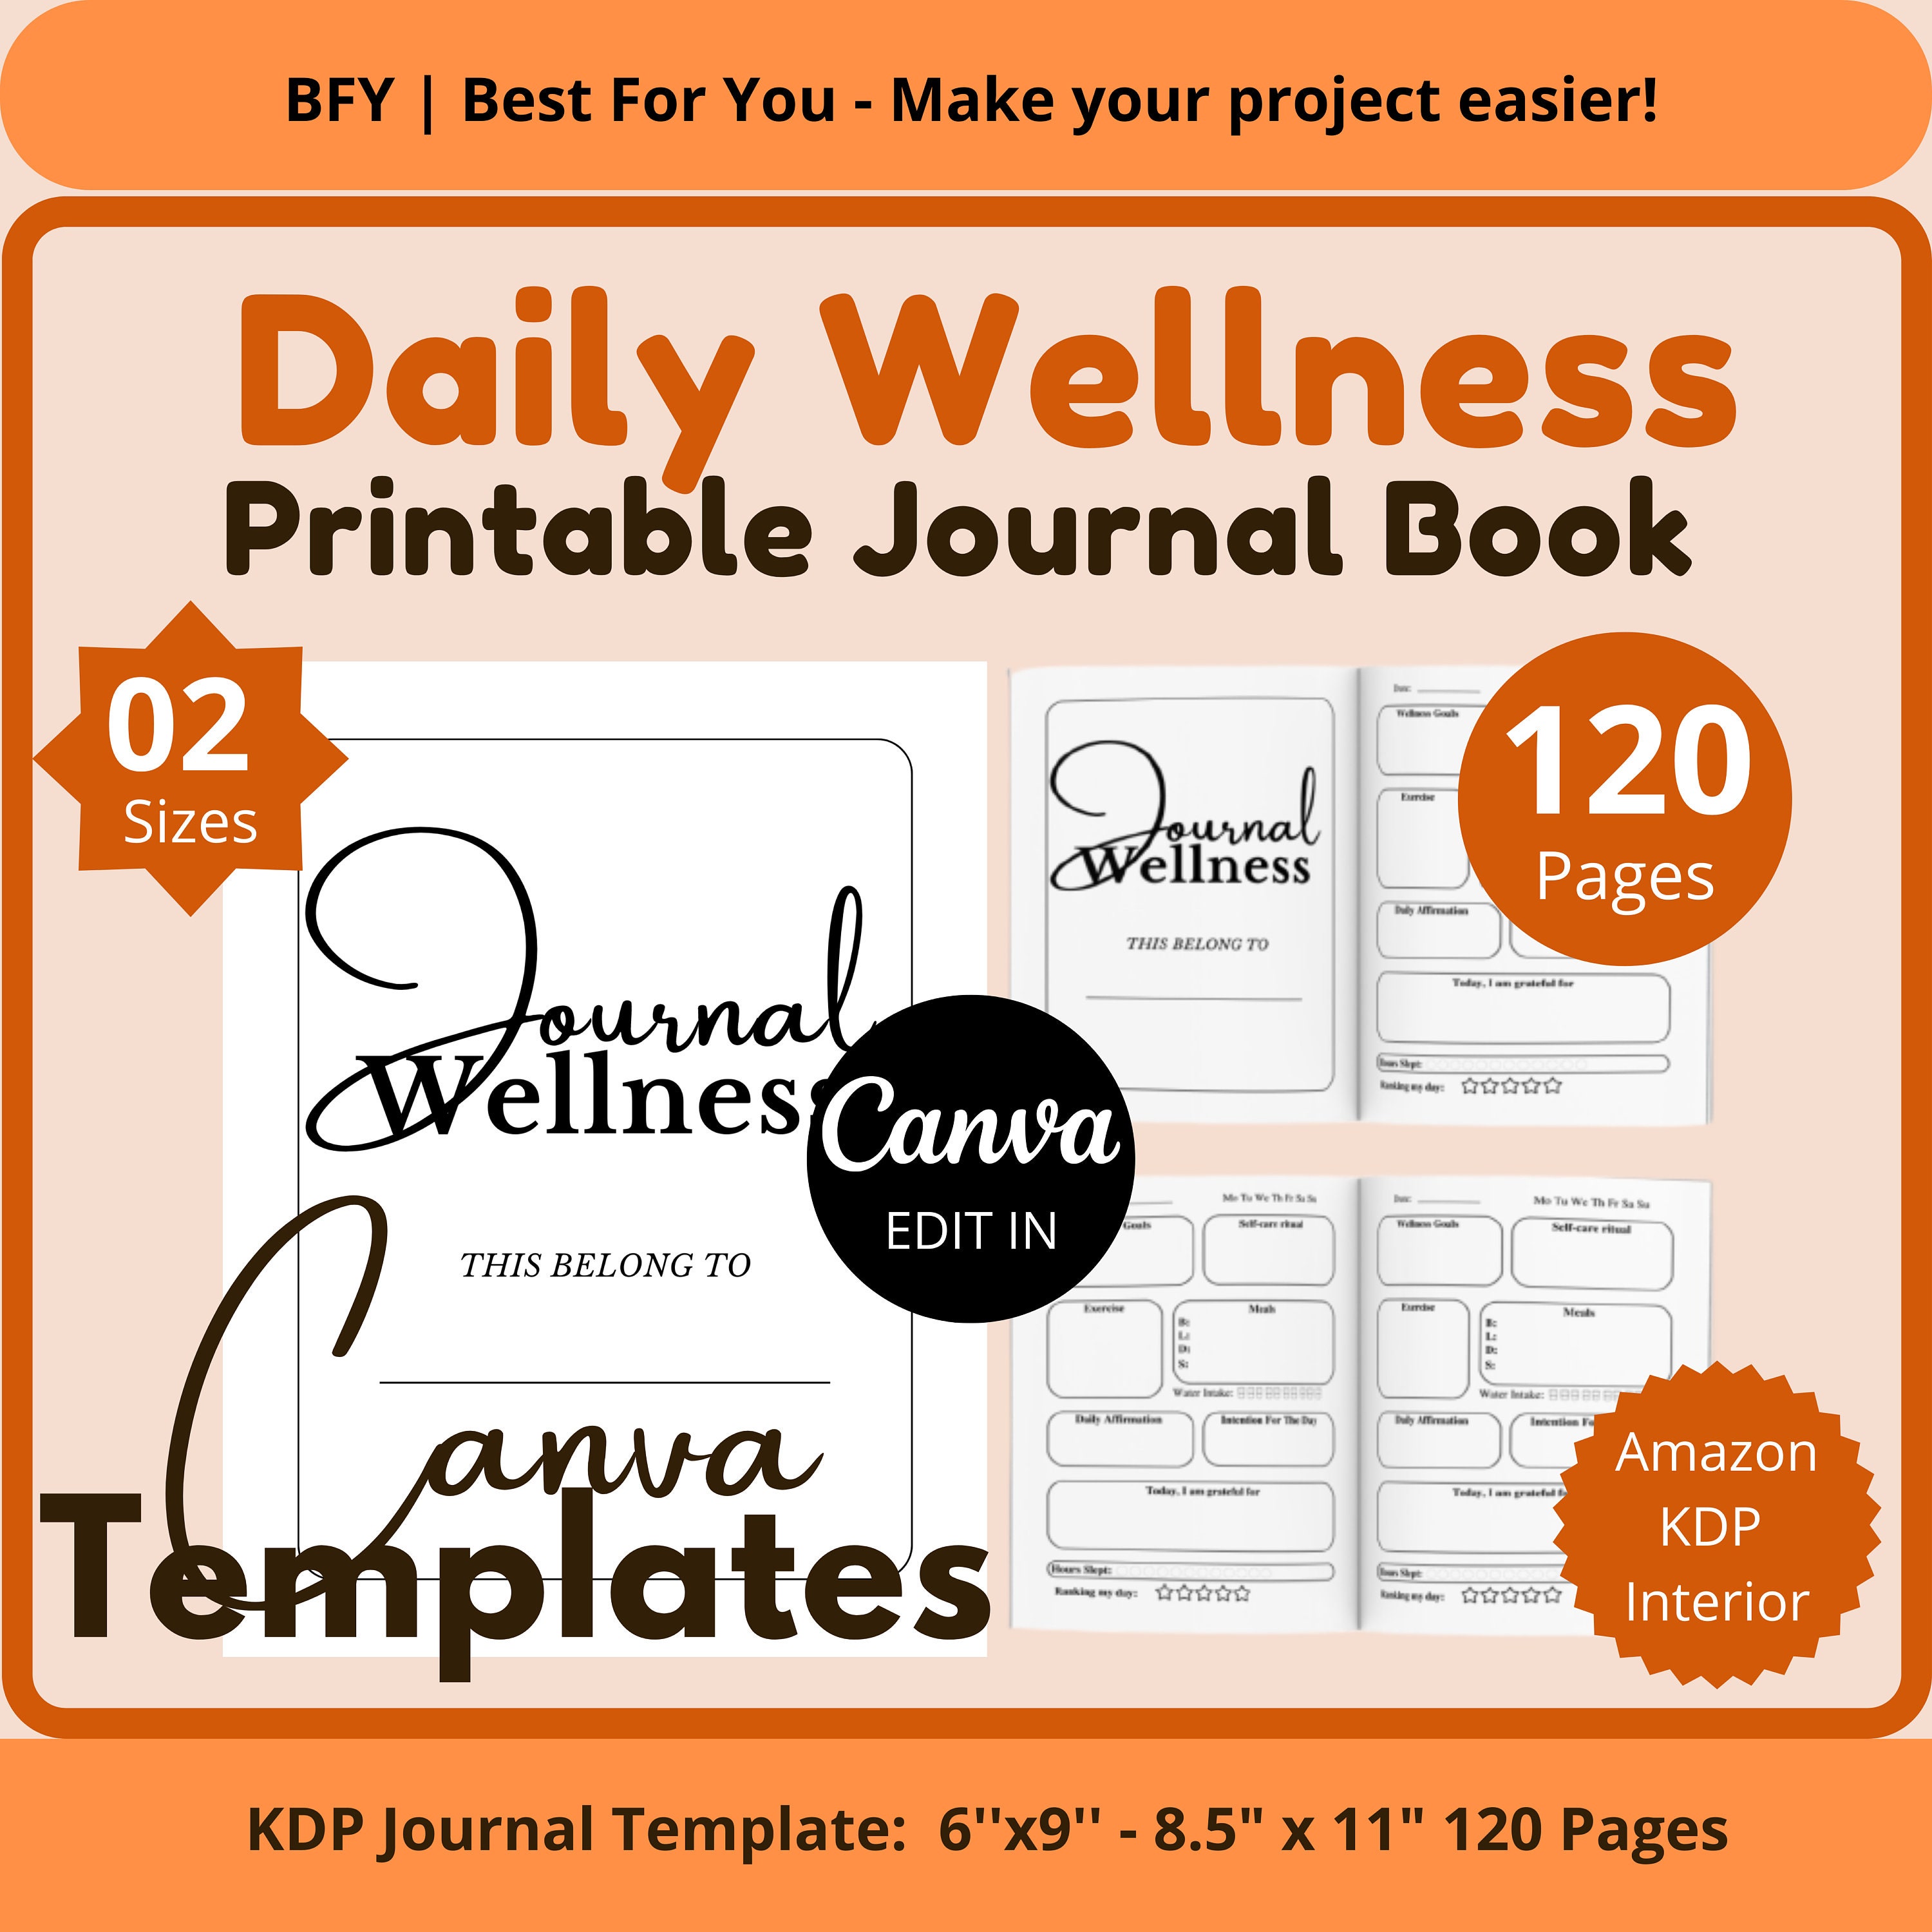 2 Printable Daily Wellness Journal  KDP Interior 